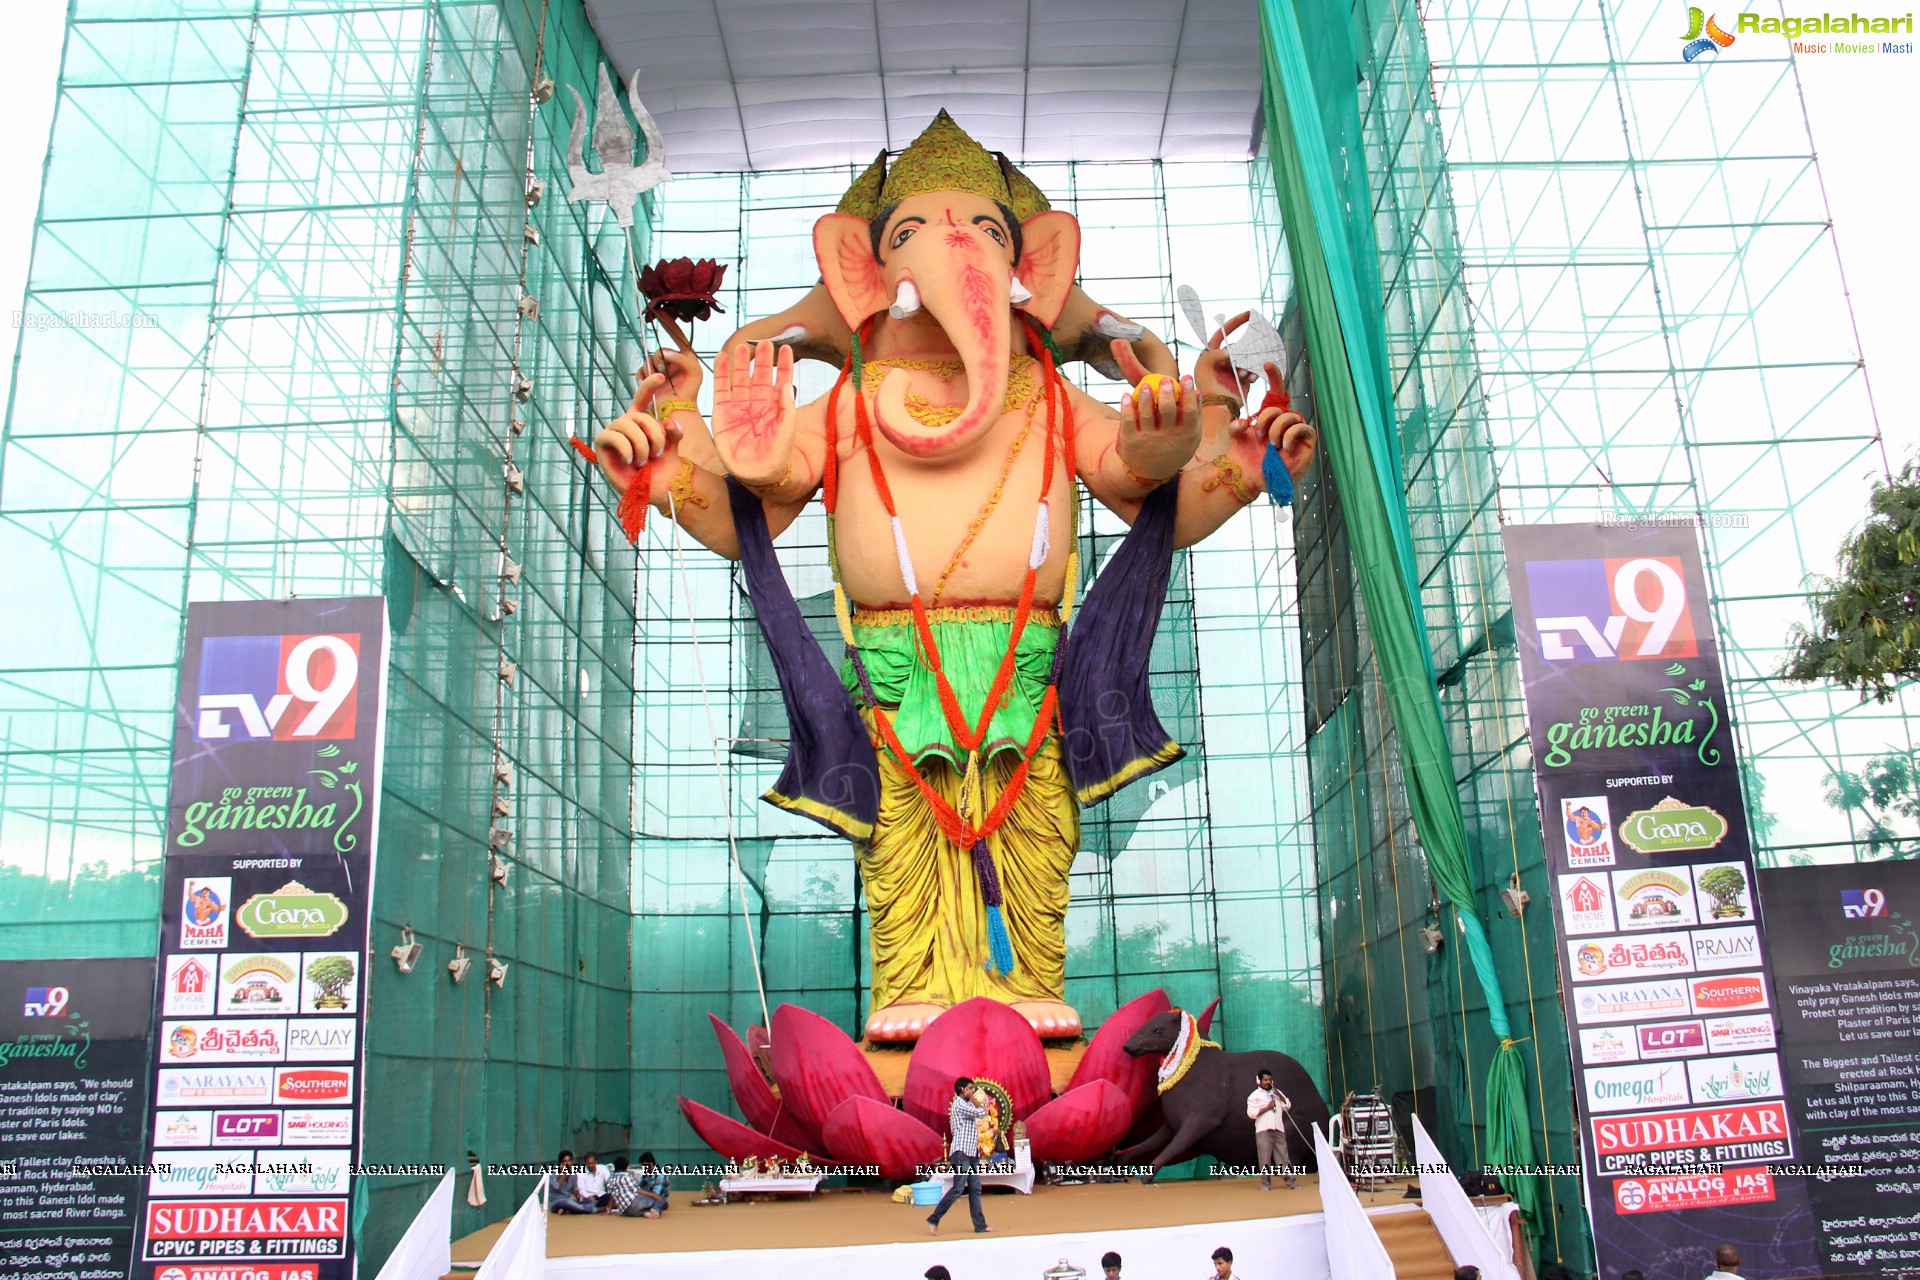 TV9 Eco Ganesh 2013, Hyderabad